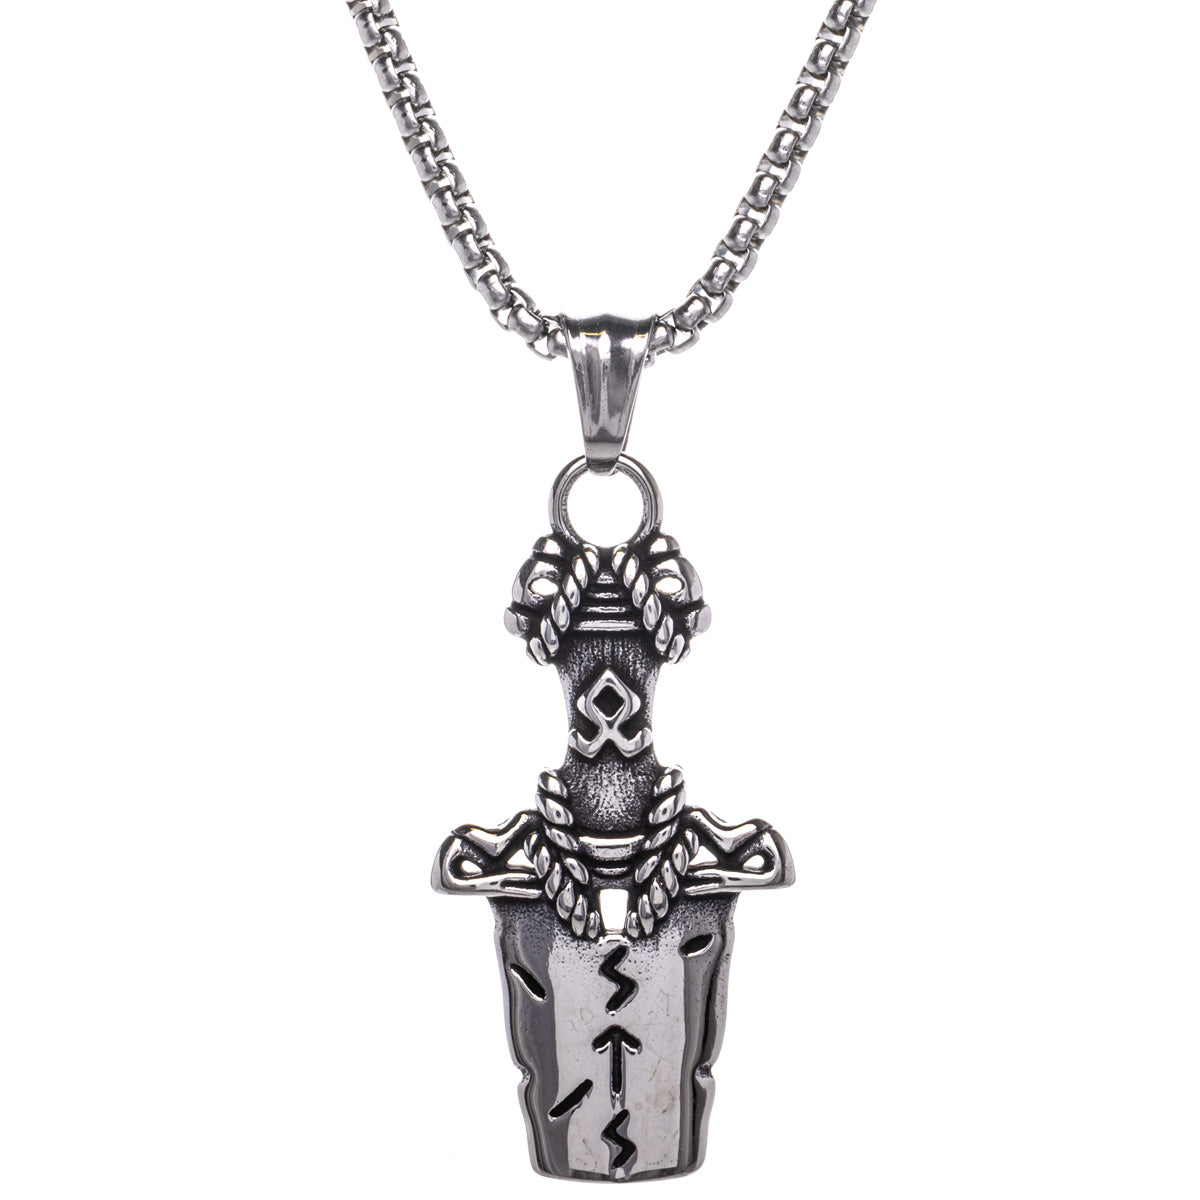 Viking axe pendant necklace (Steel 316L)